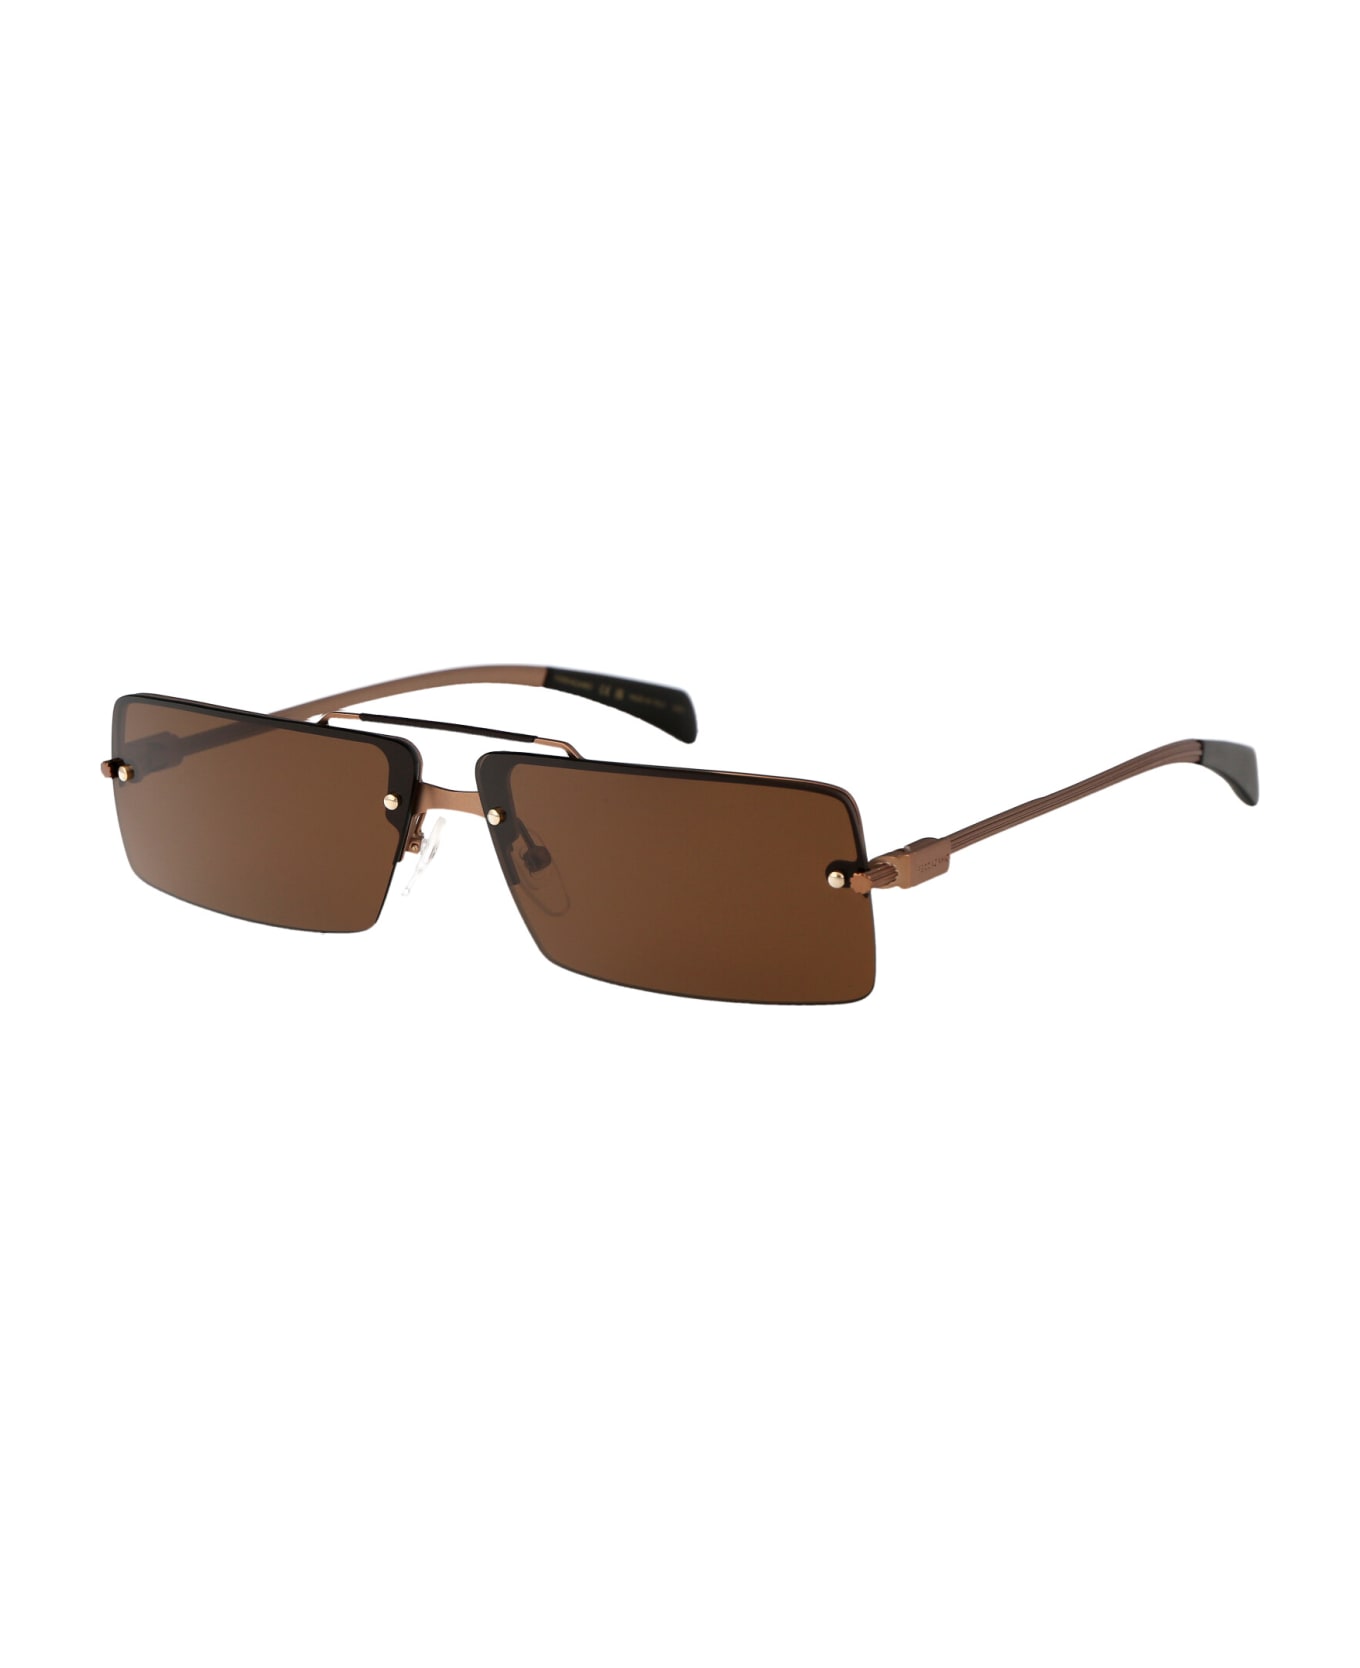 Salvatore Ferragamo Eyewear Sf306s Sunglasses - 762 GOLD BRONZE